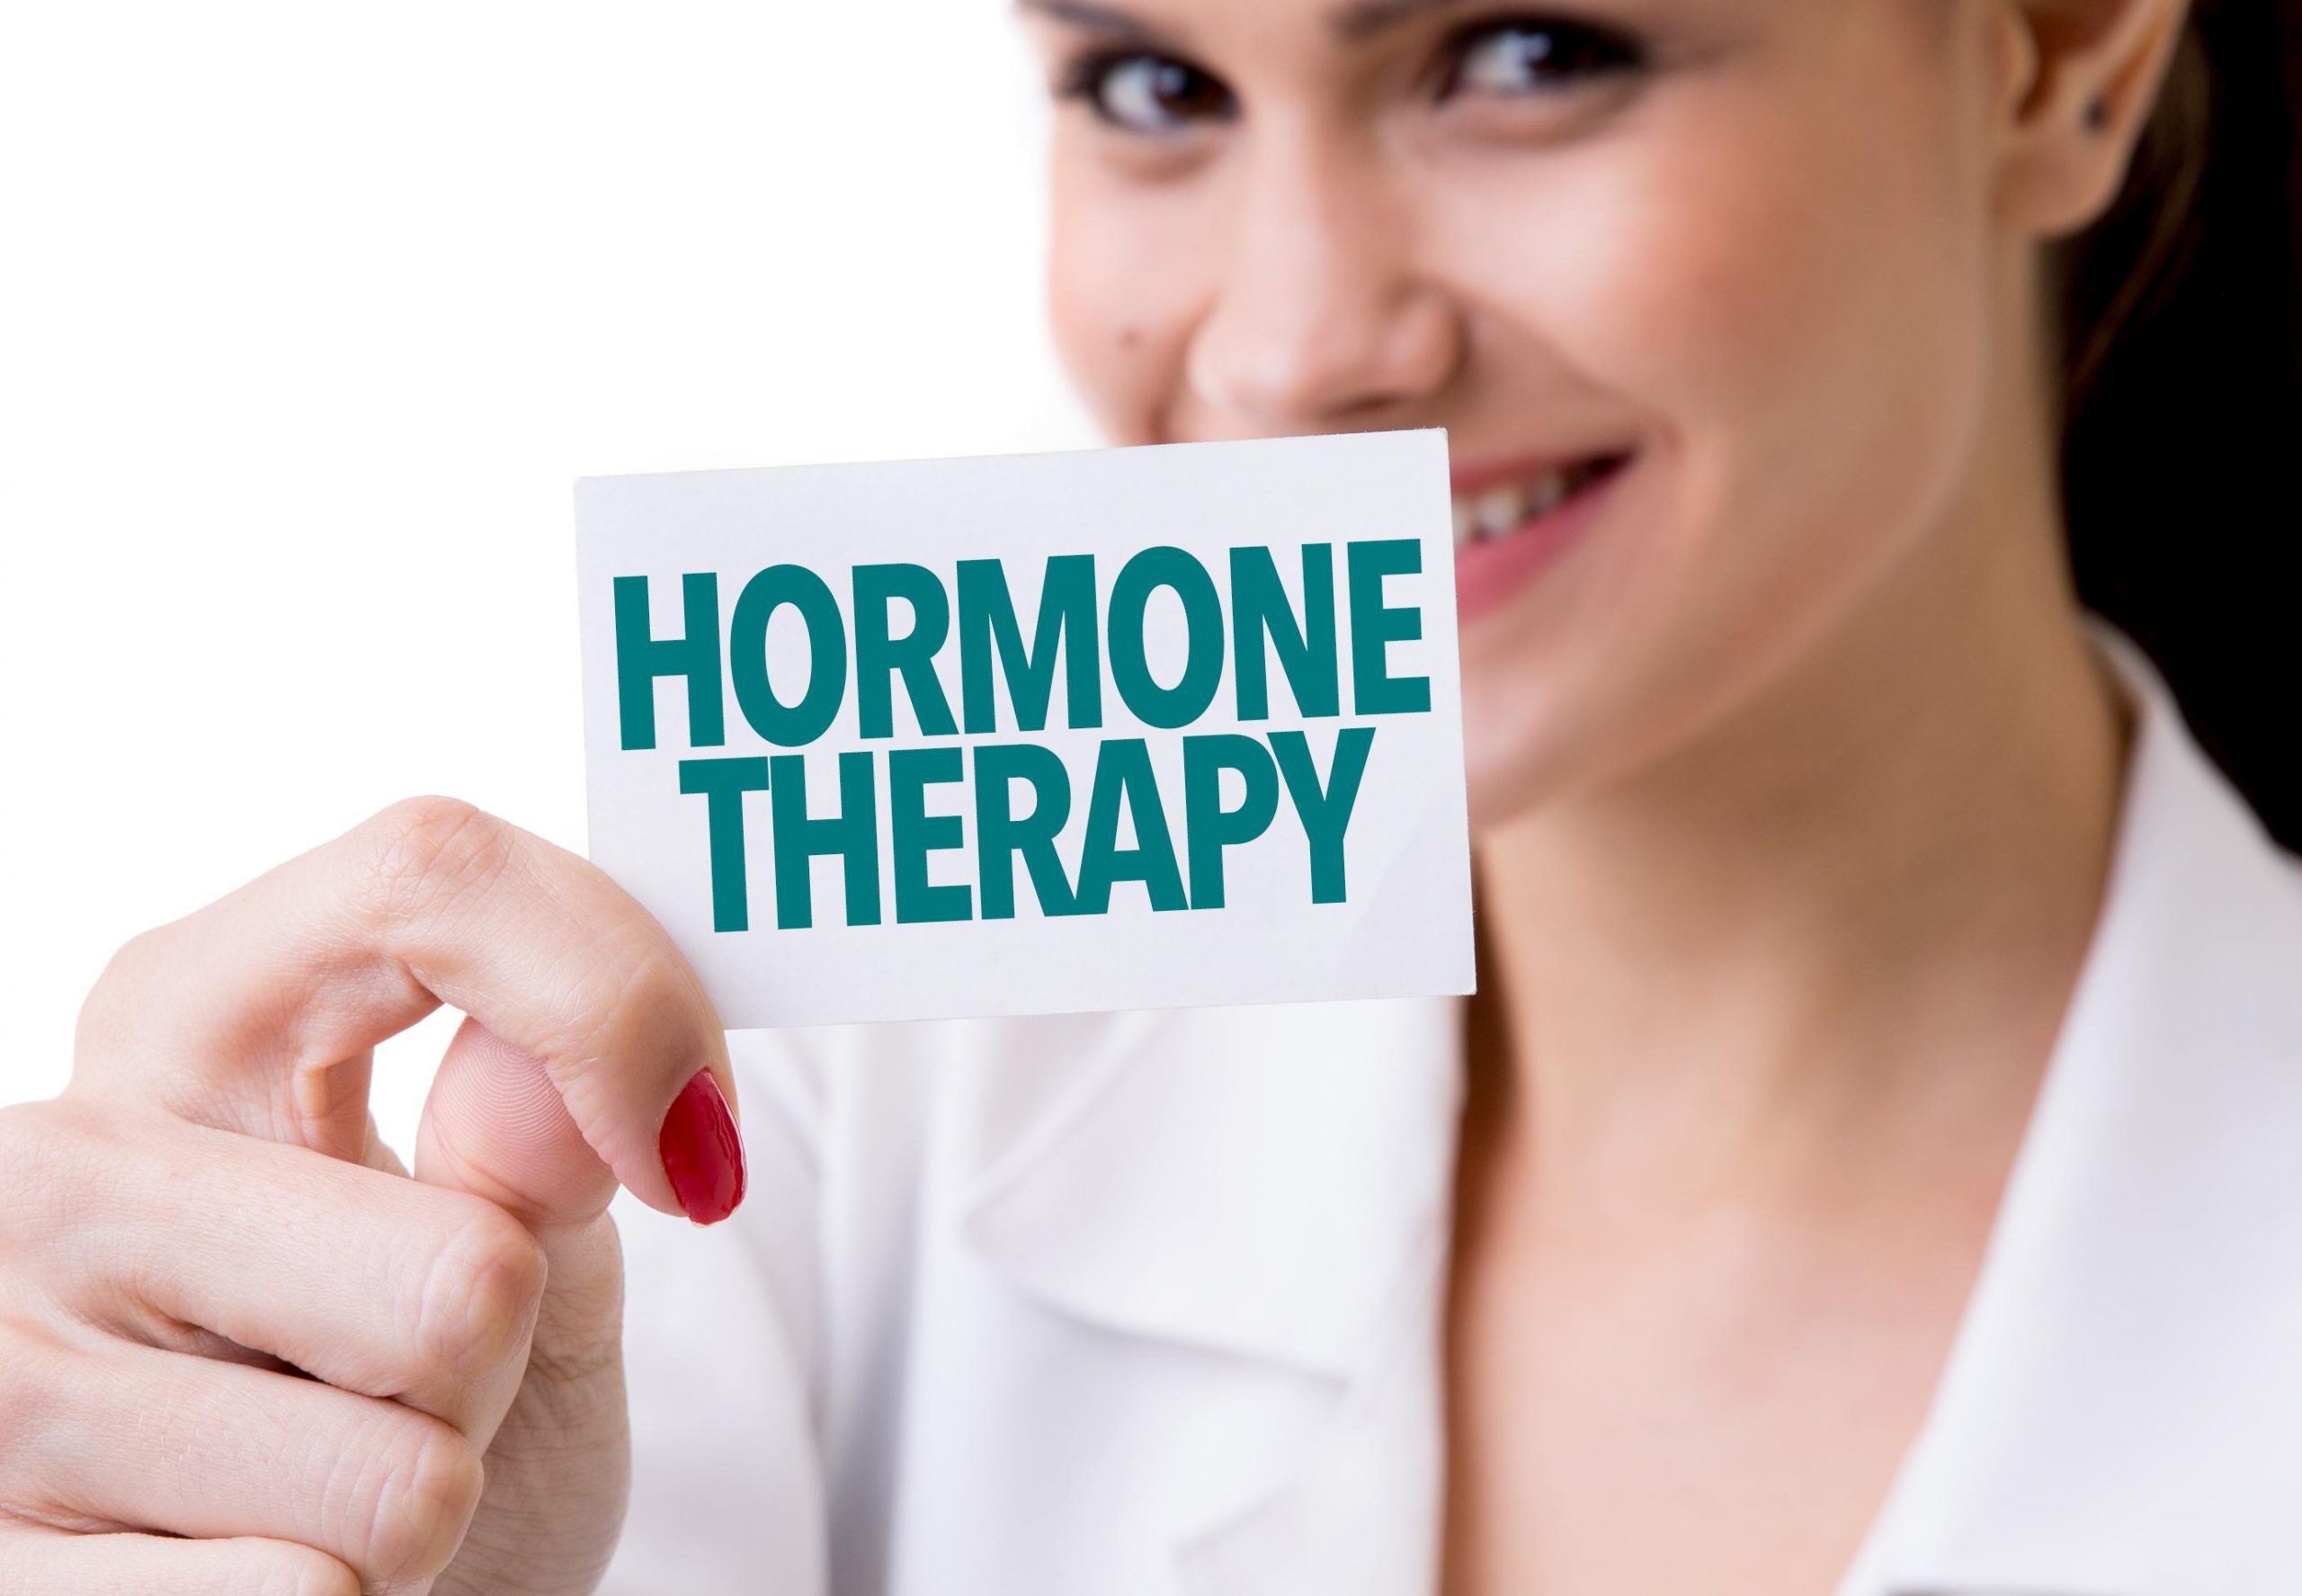 Hormone Pellet Therapy